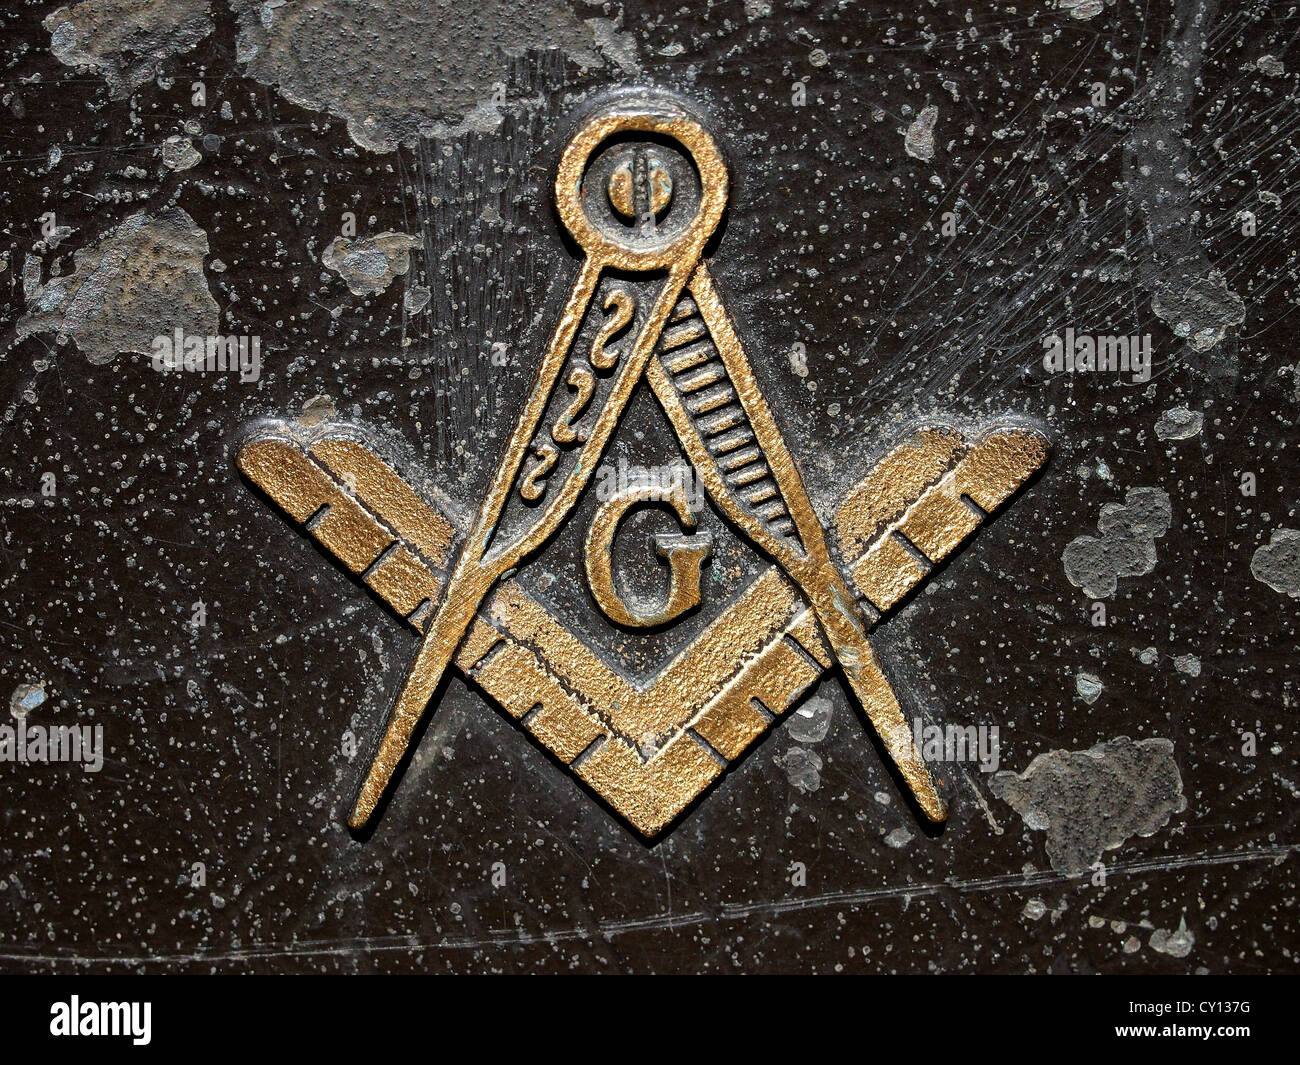 Freemasonry symbol hi-res stock photography and images - Alamy